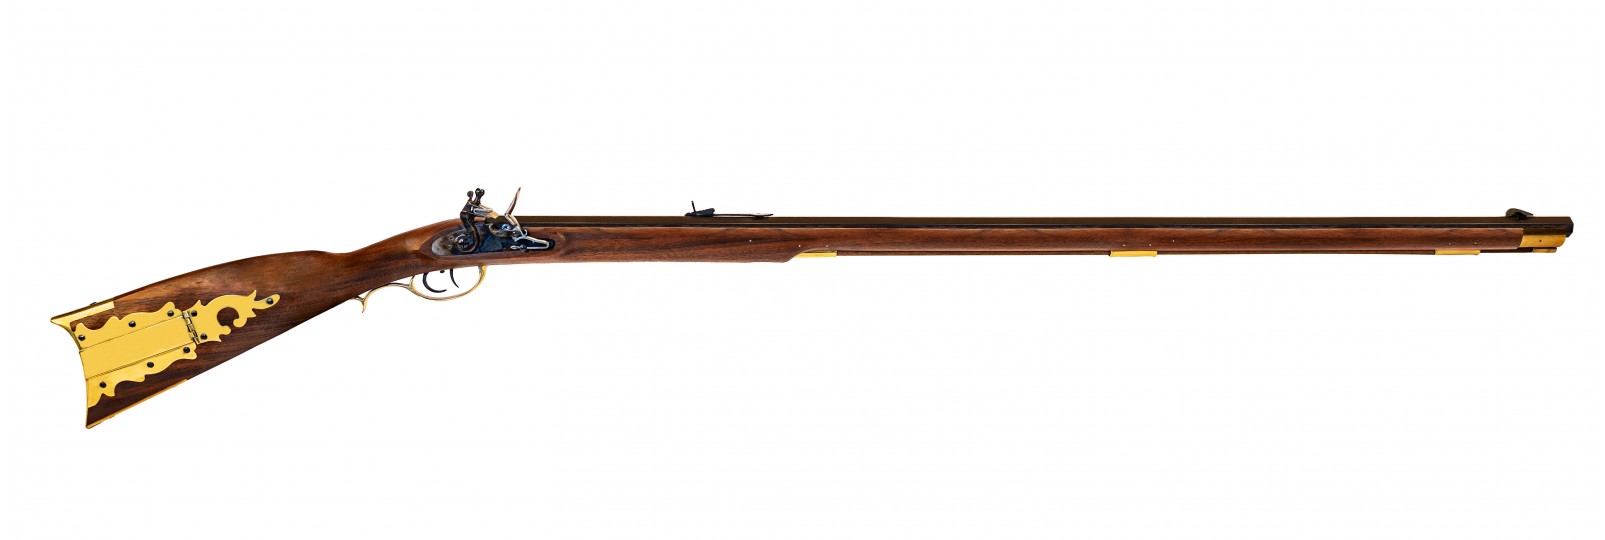 Pennsylvania Dixie Rifle flintlock model